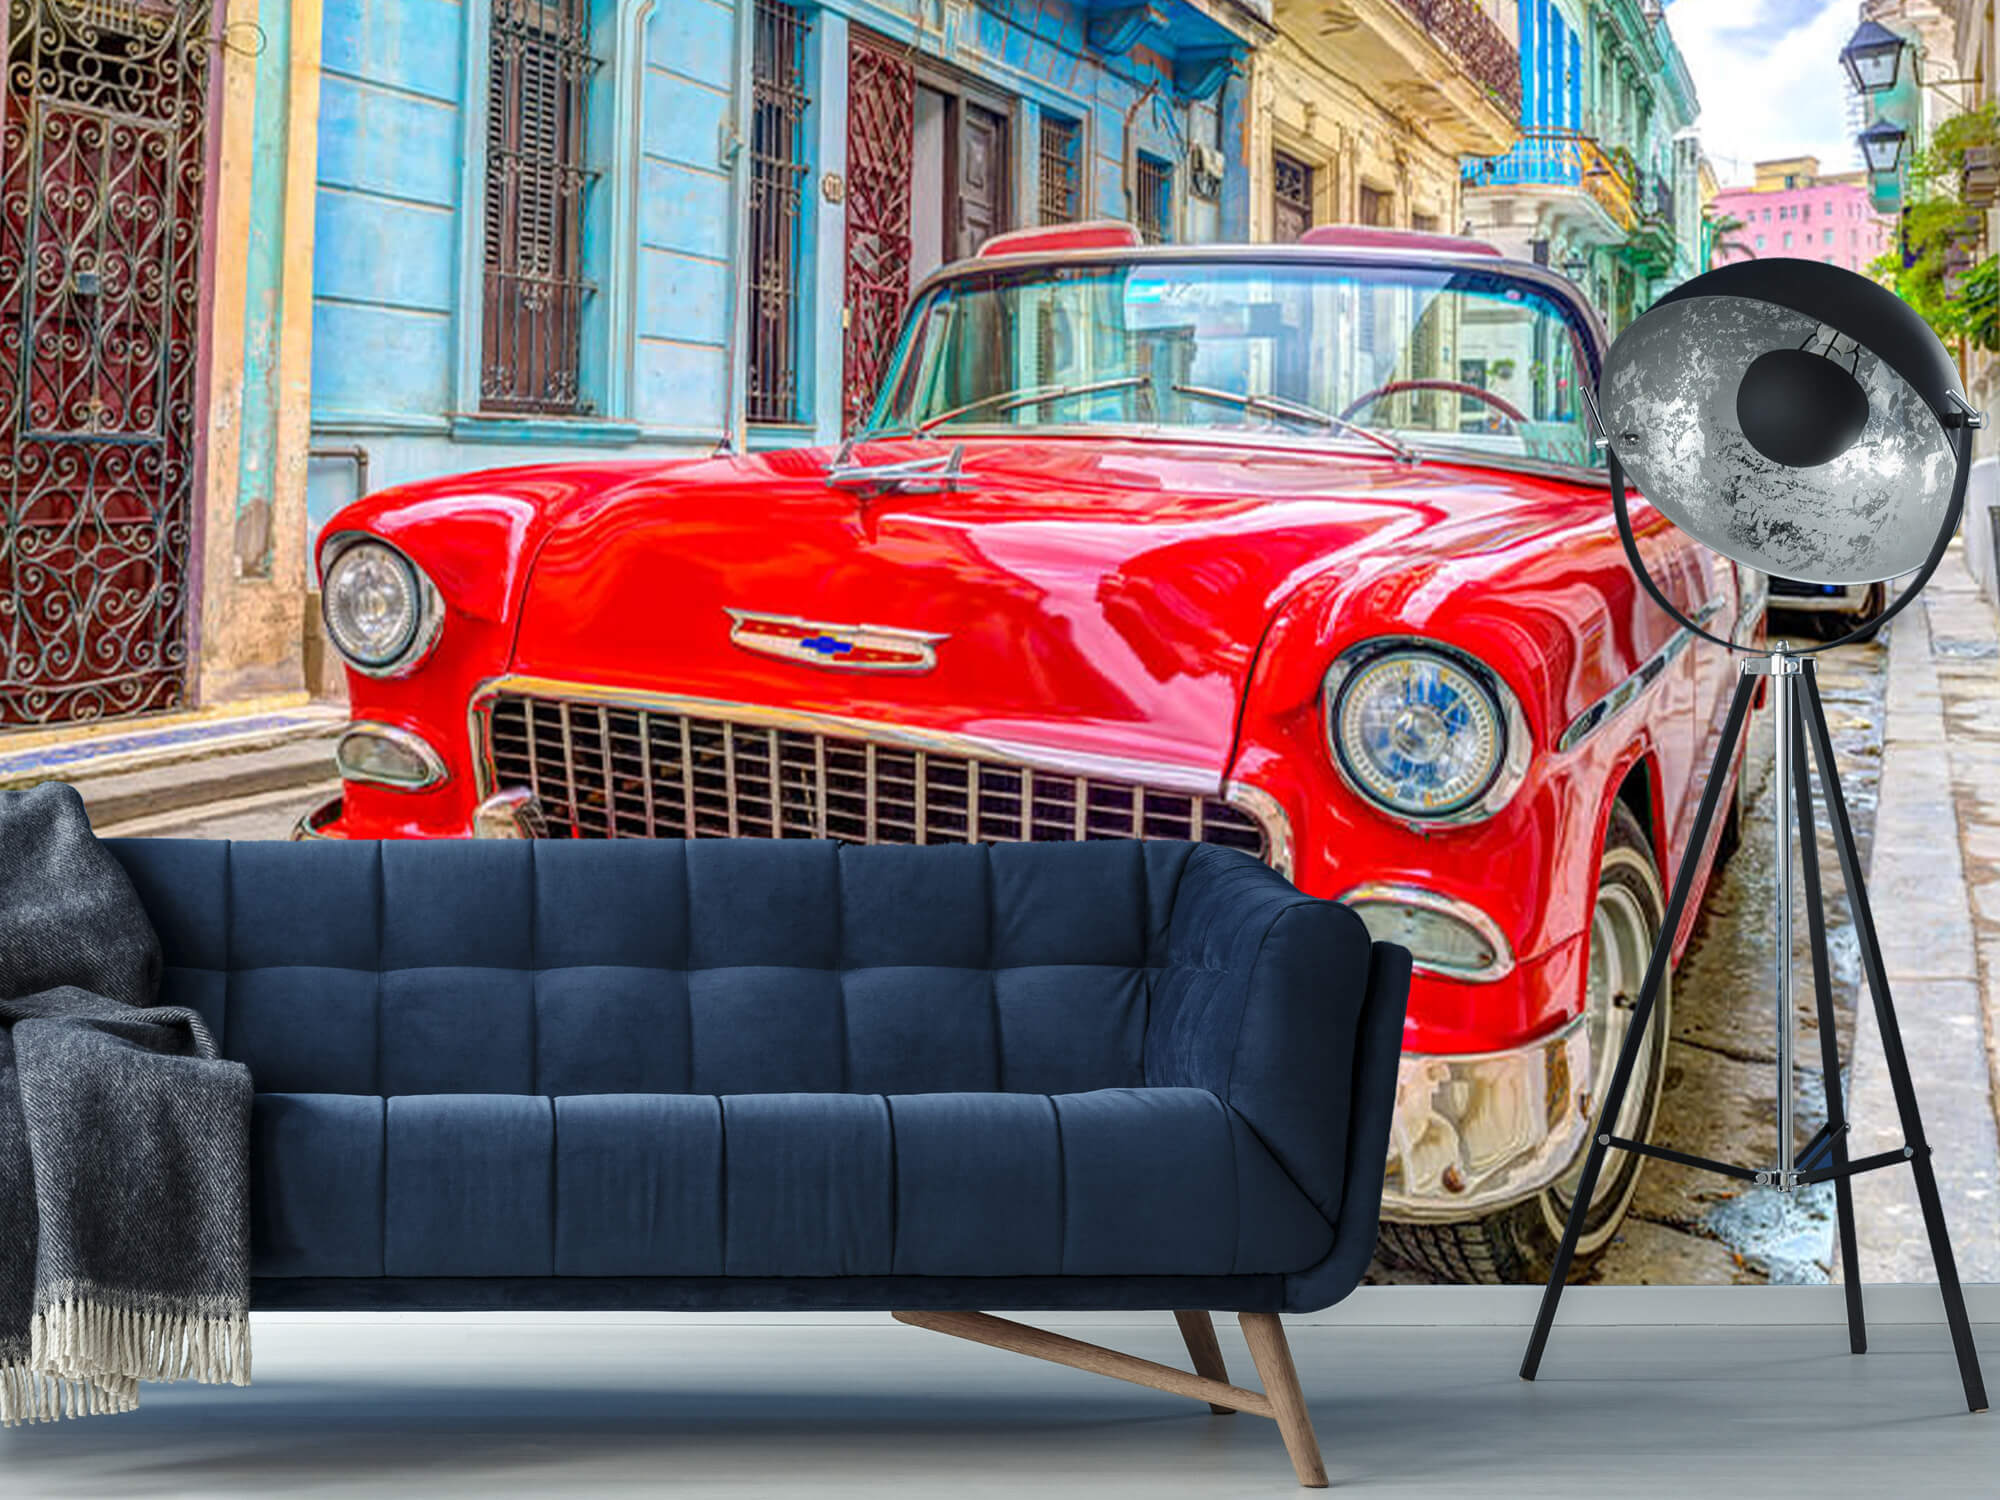  Vintage auto in Havana 4